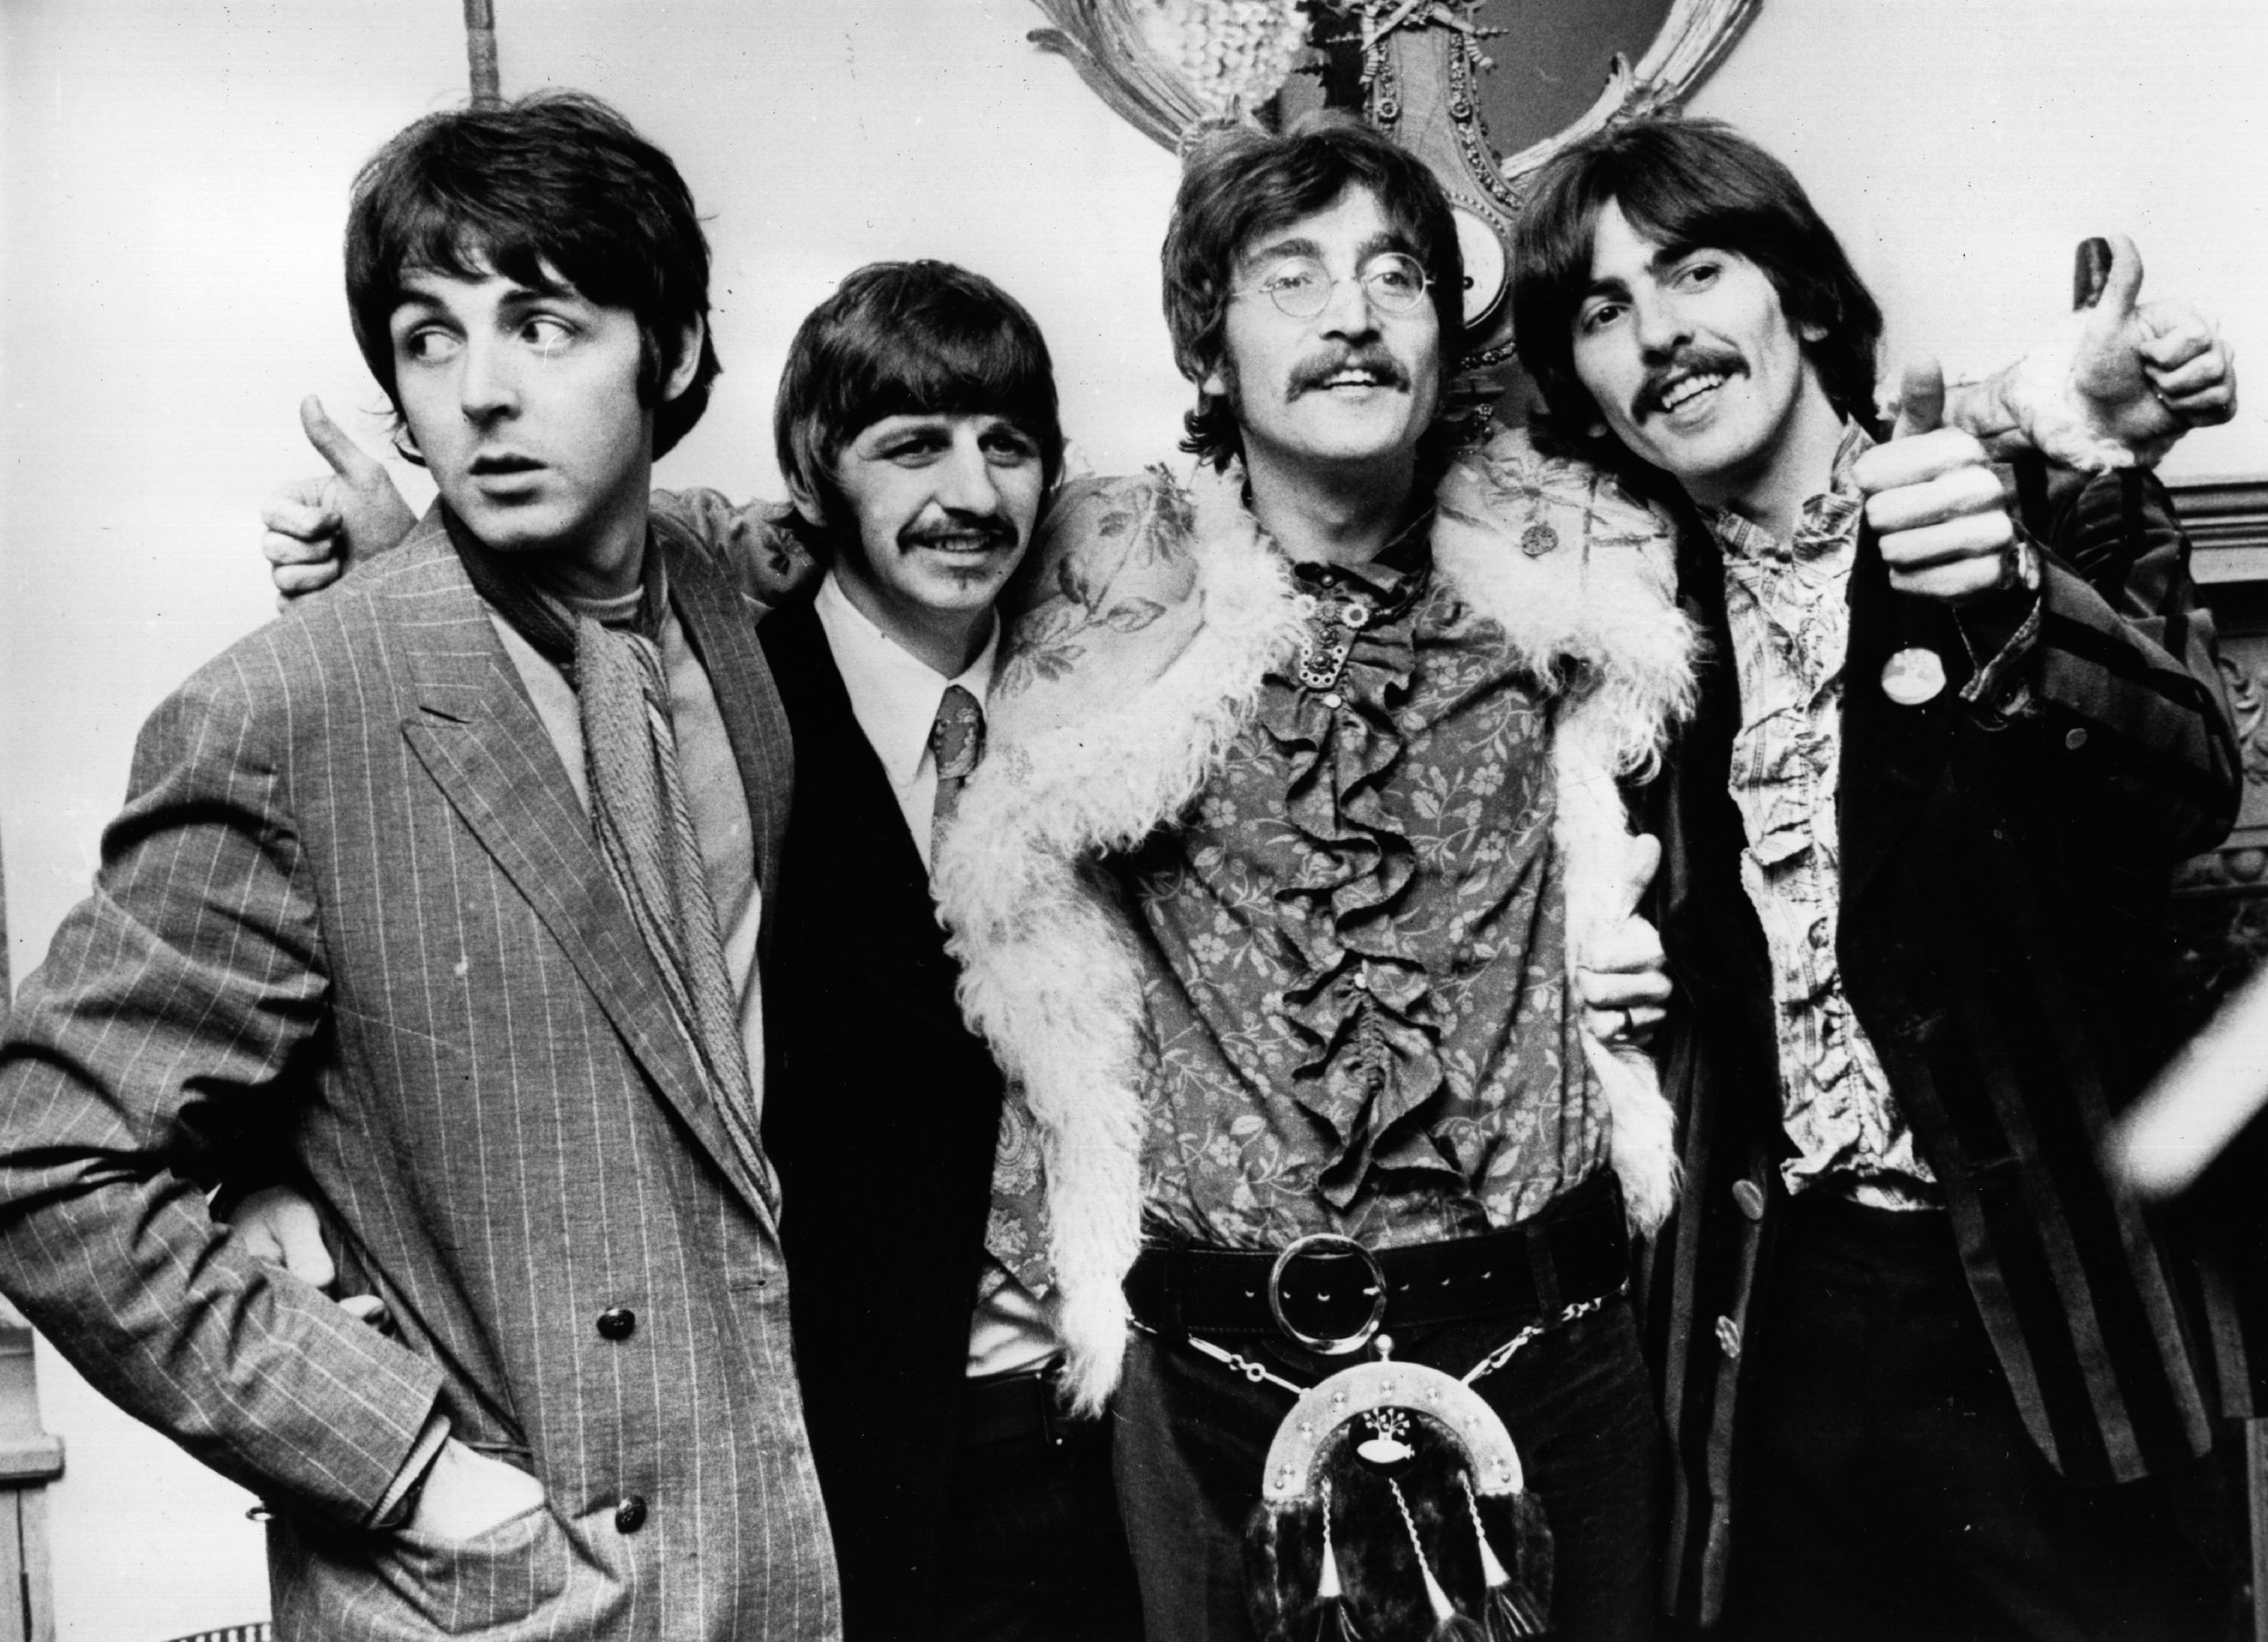 The Beatles during the 'White Album' era